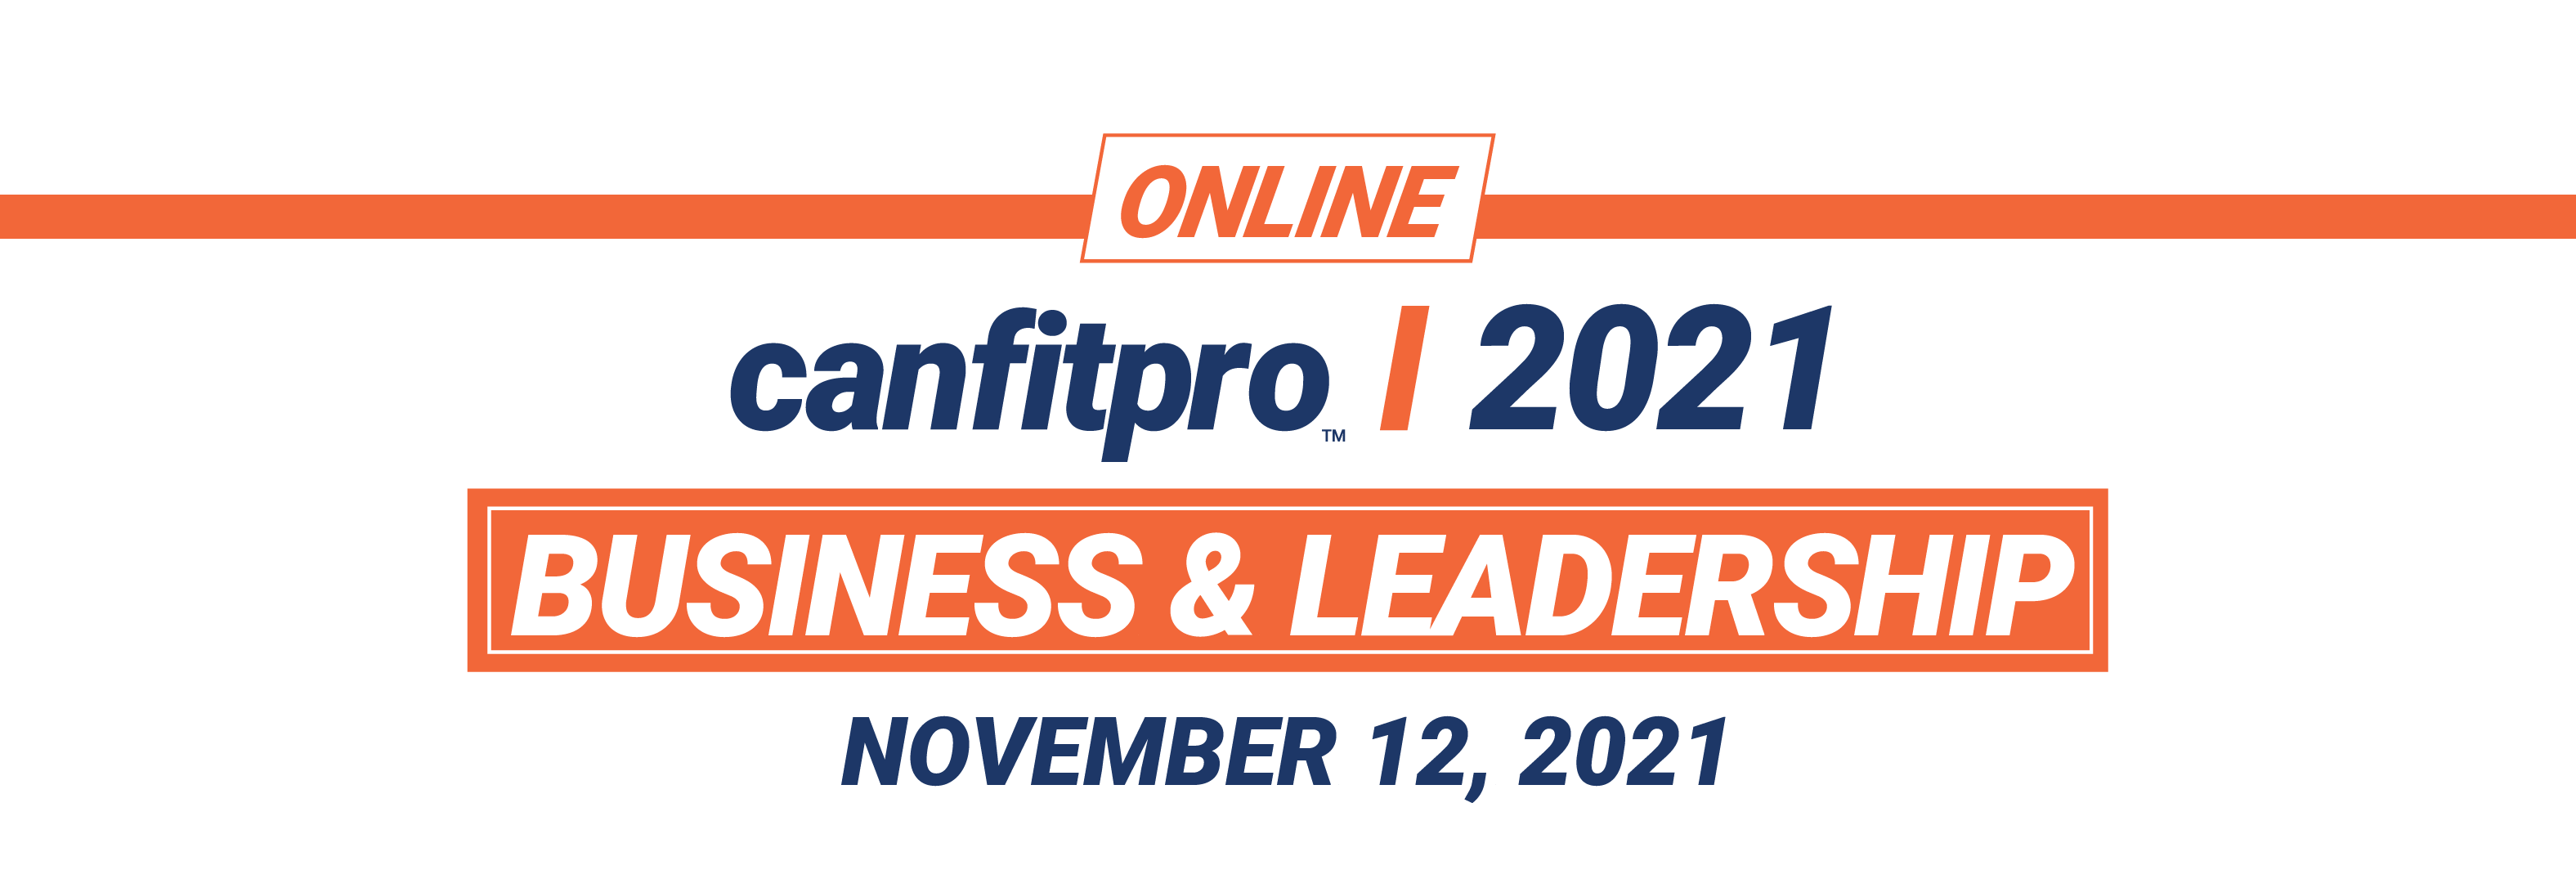 canfitpro 2021 Online: Business & Leadership logo